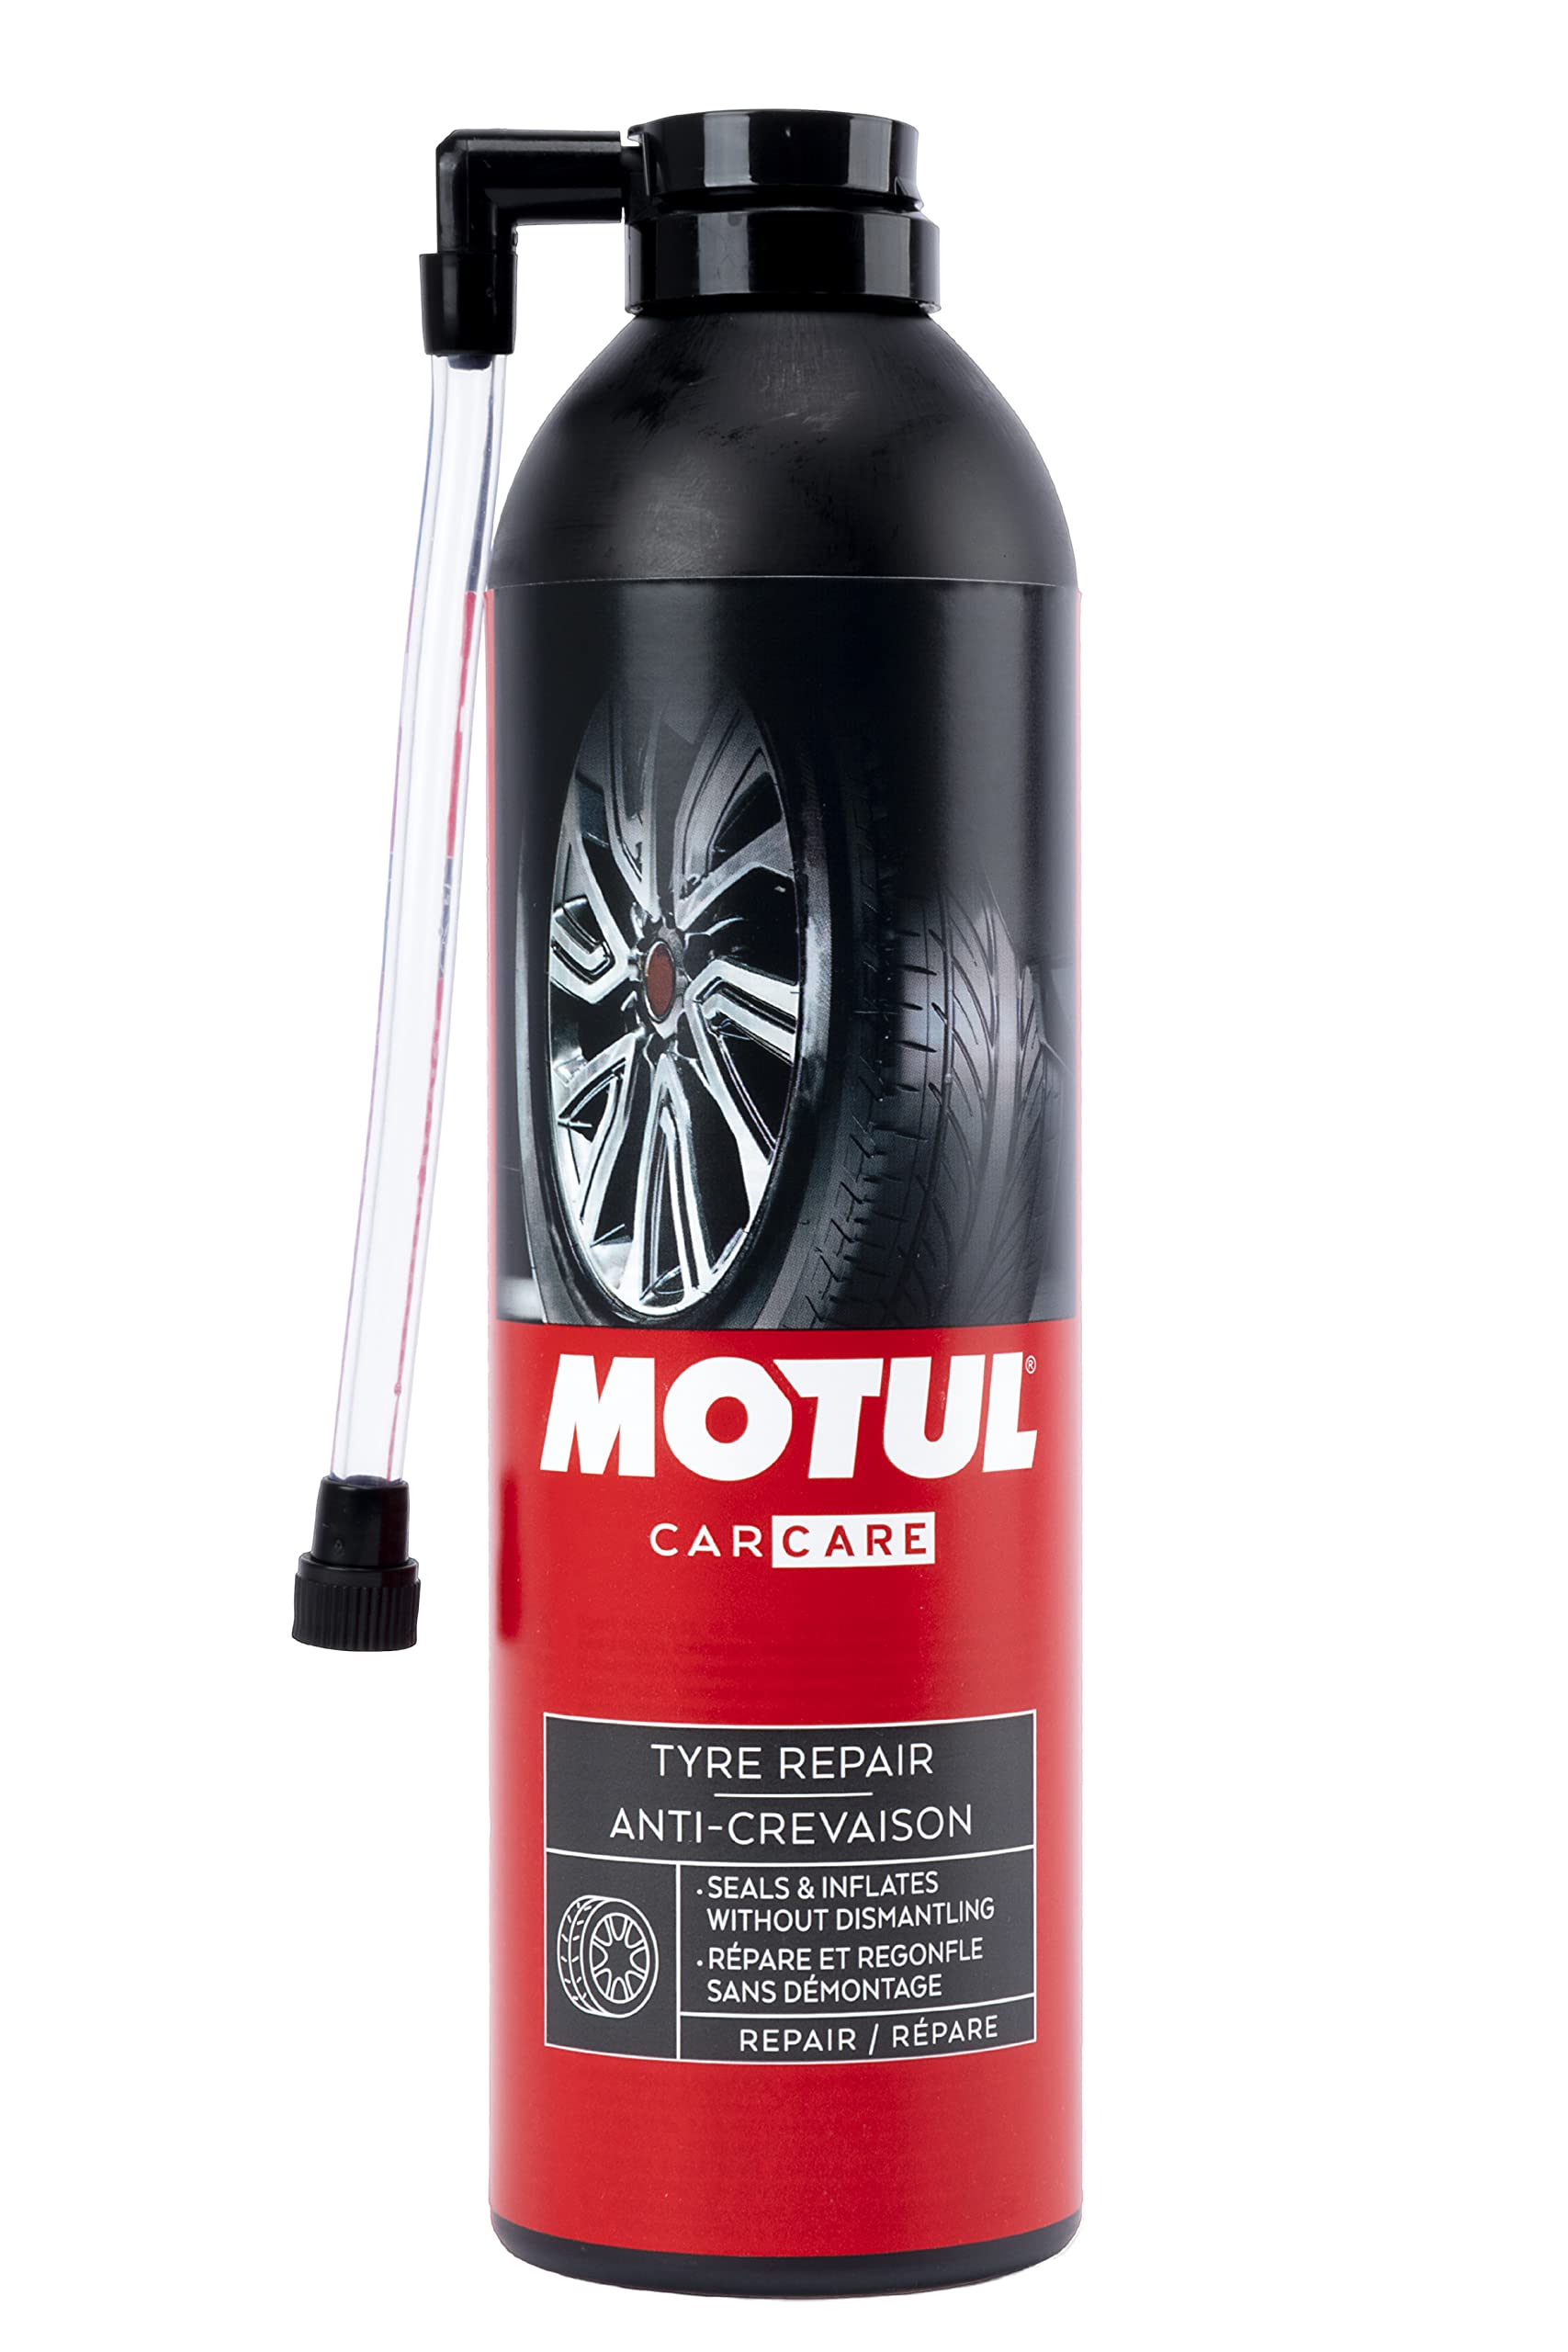 Motul Car Care Reifenpannenhilfe 500 ml von Motul